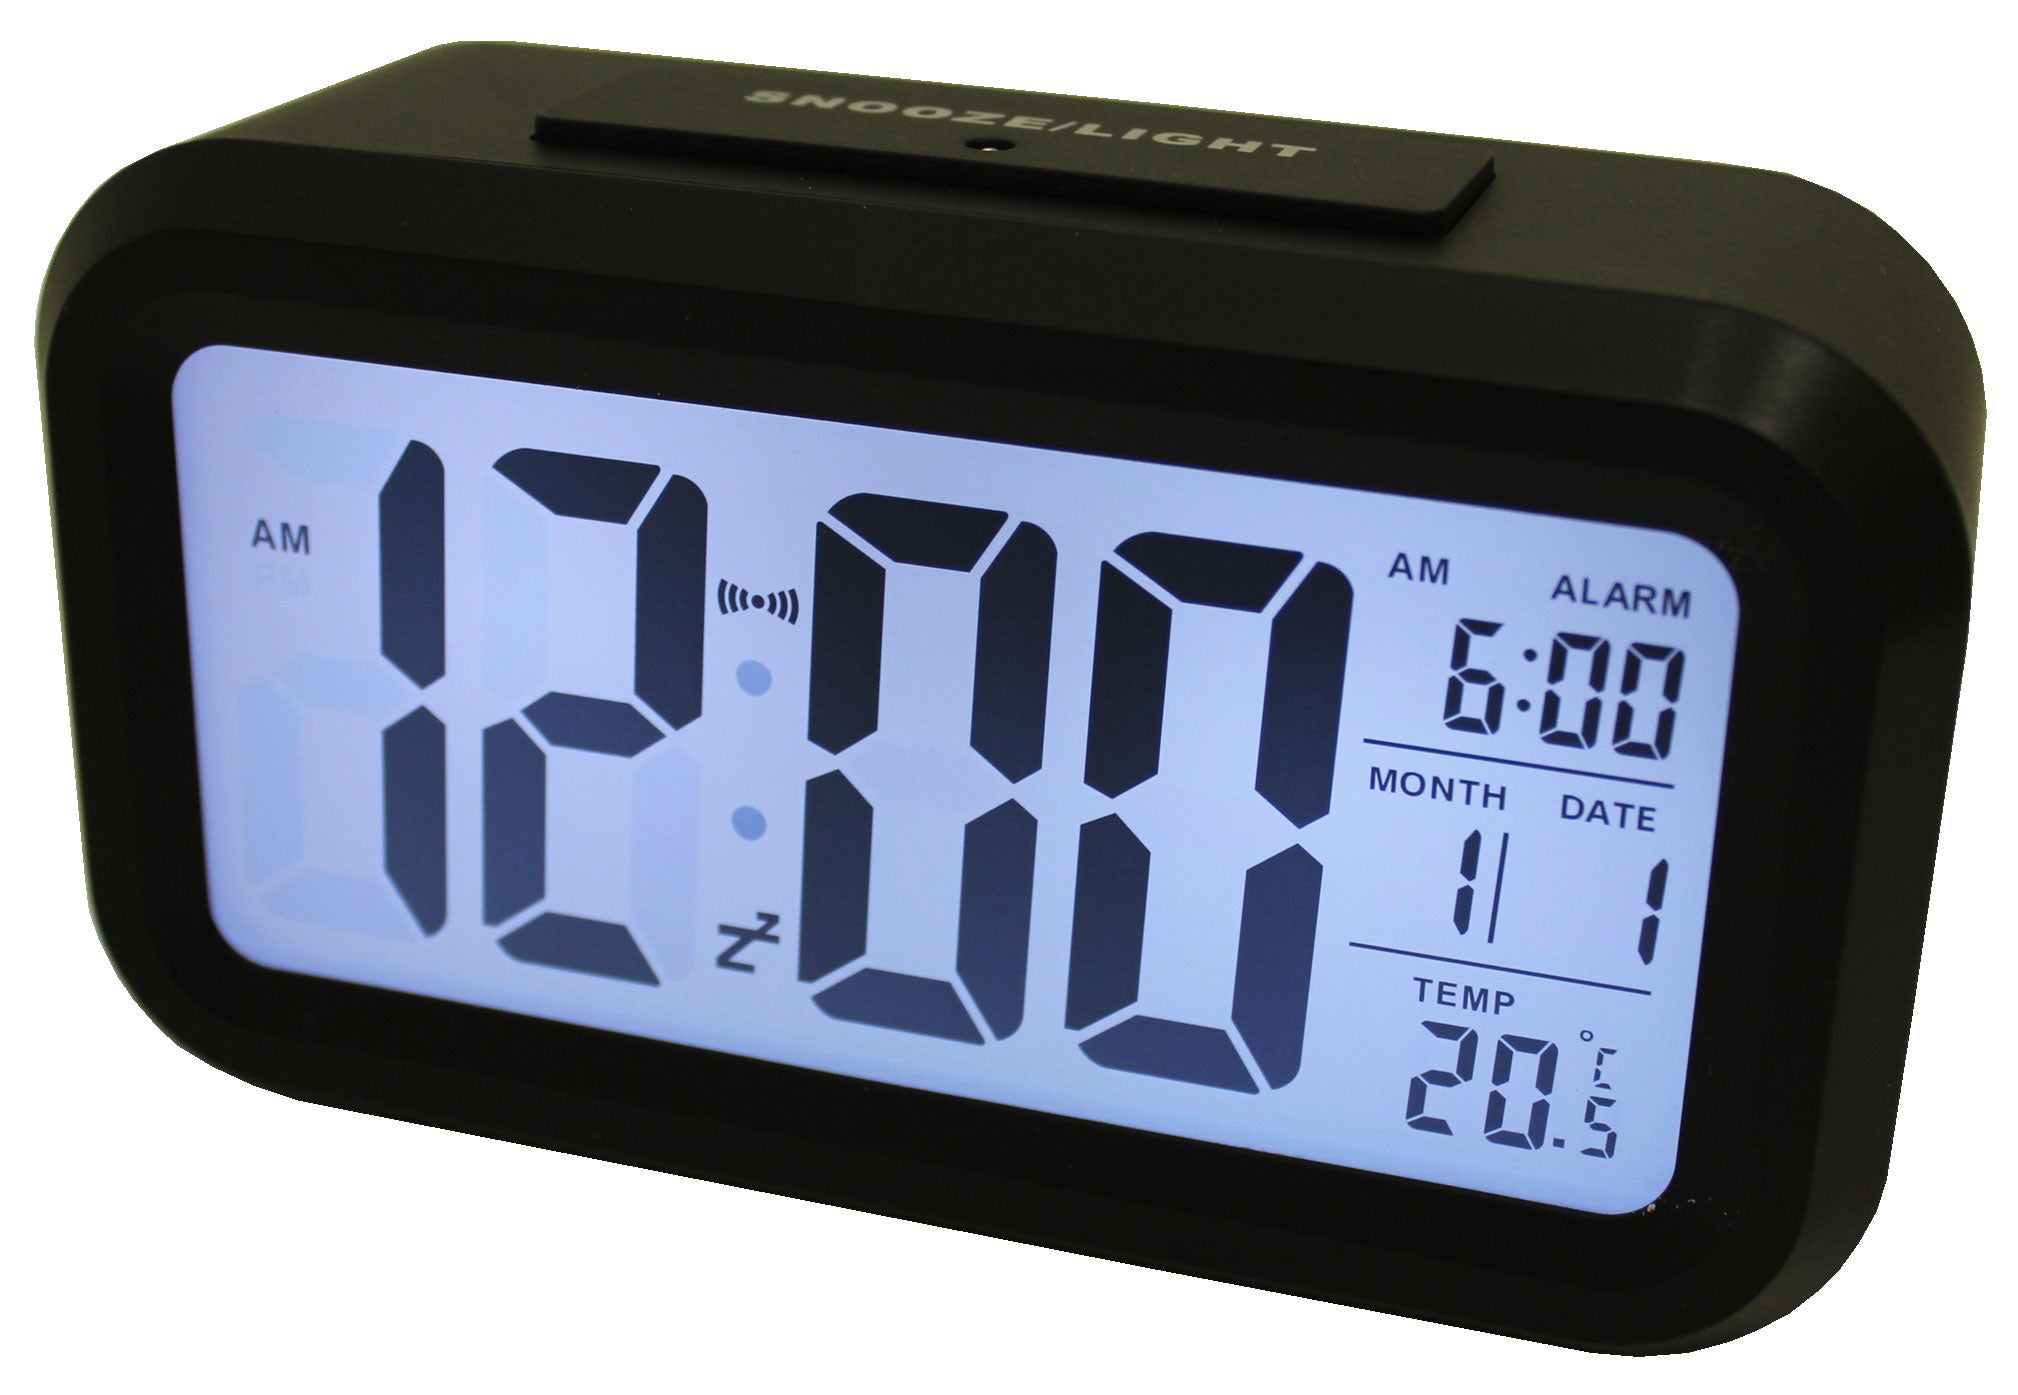 Light Sensor Alarm Clock W/ Backlit Display Portable Battery Operated Black